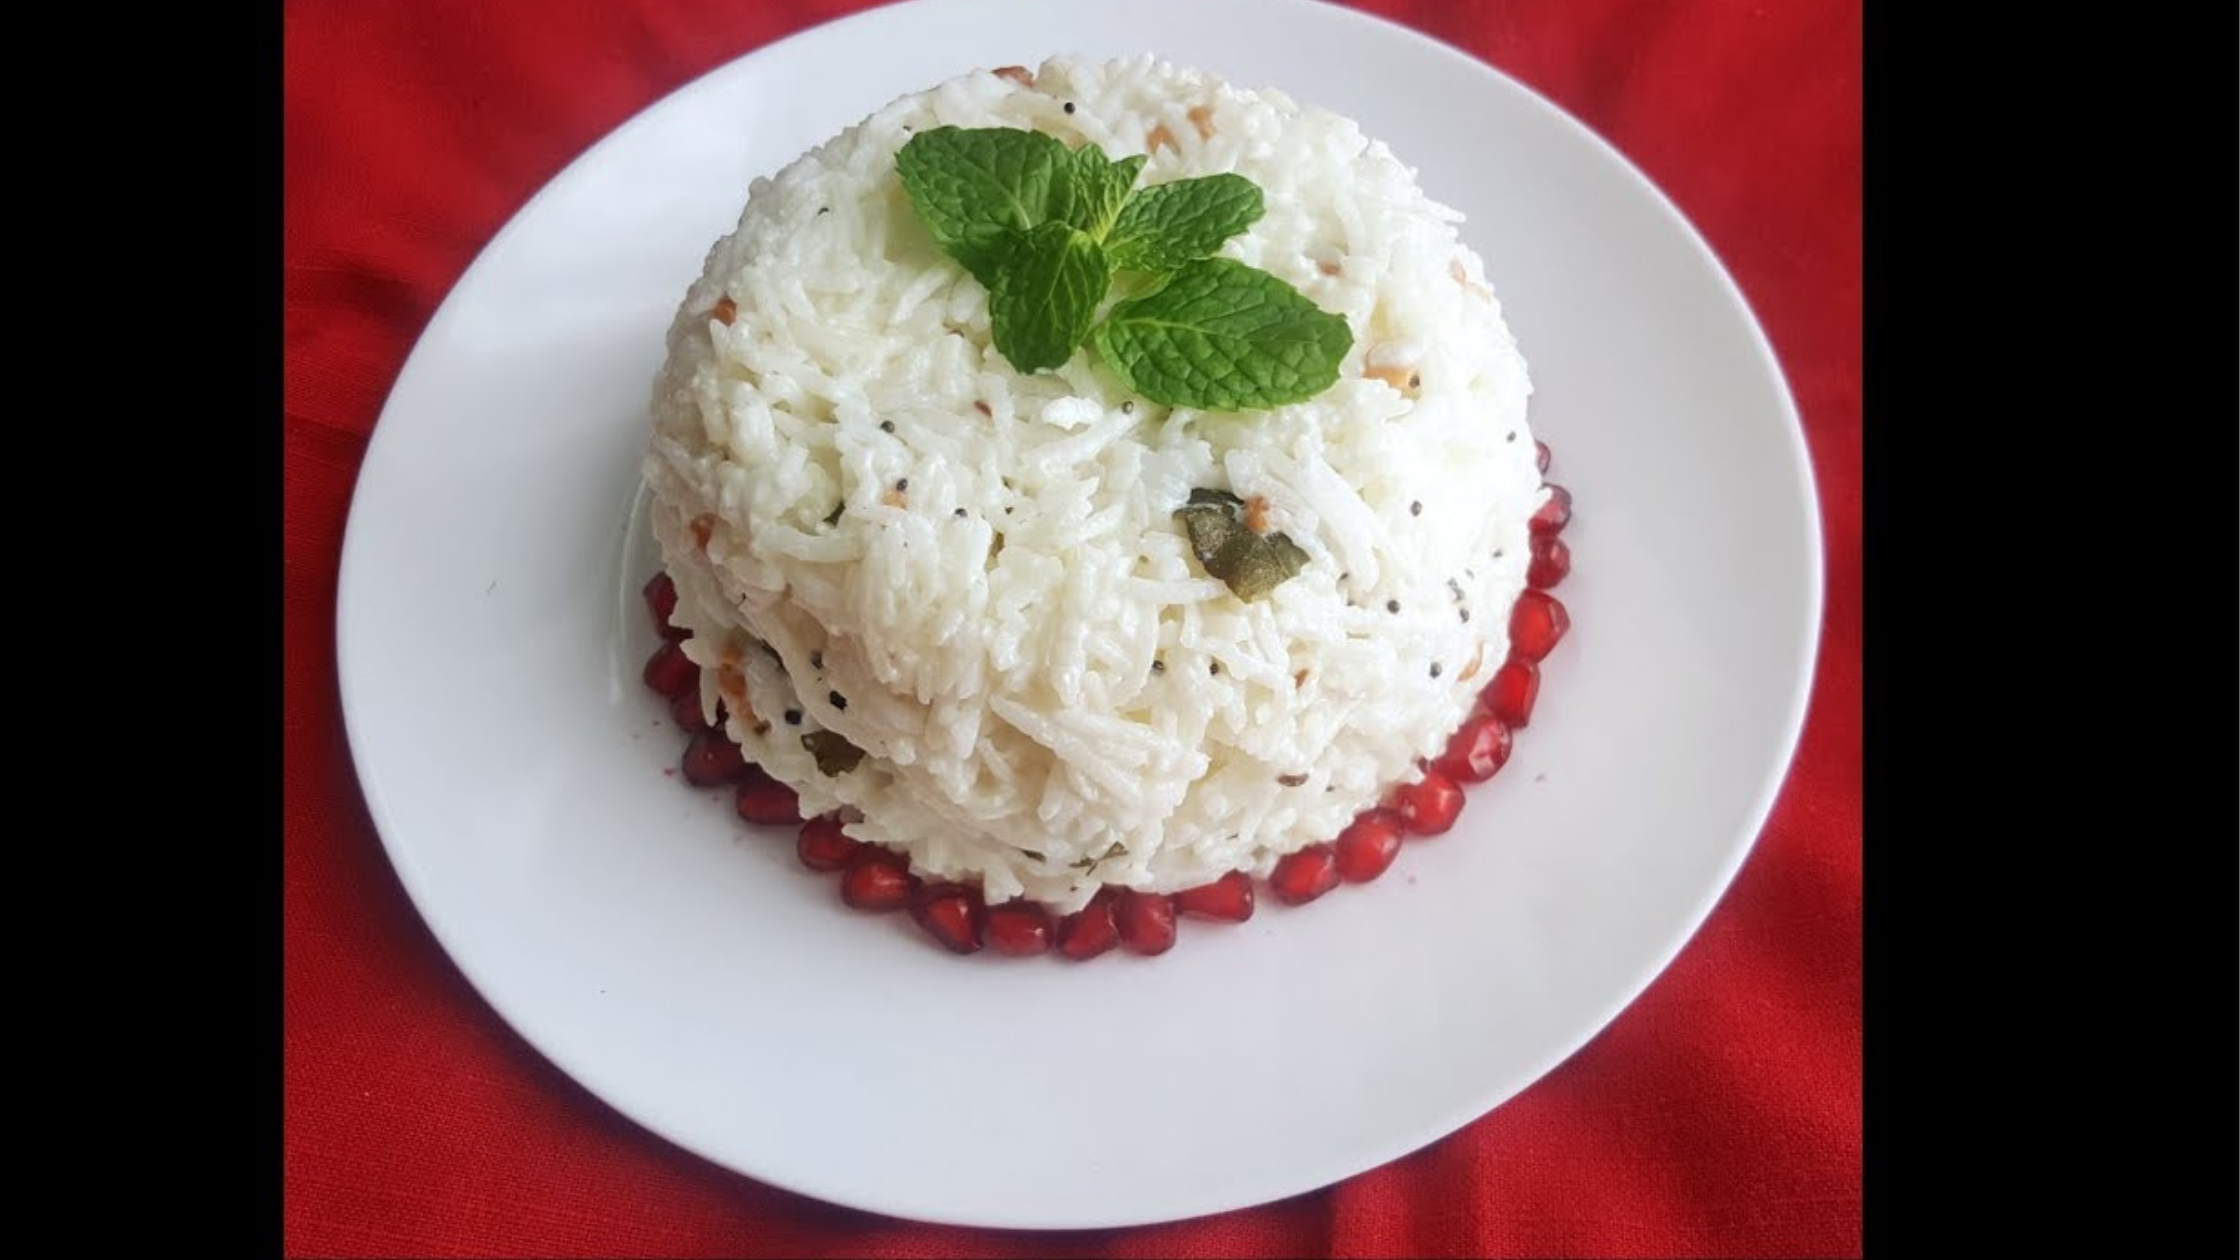 Enjoy everyone's summer favorite dish - Curd Rice